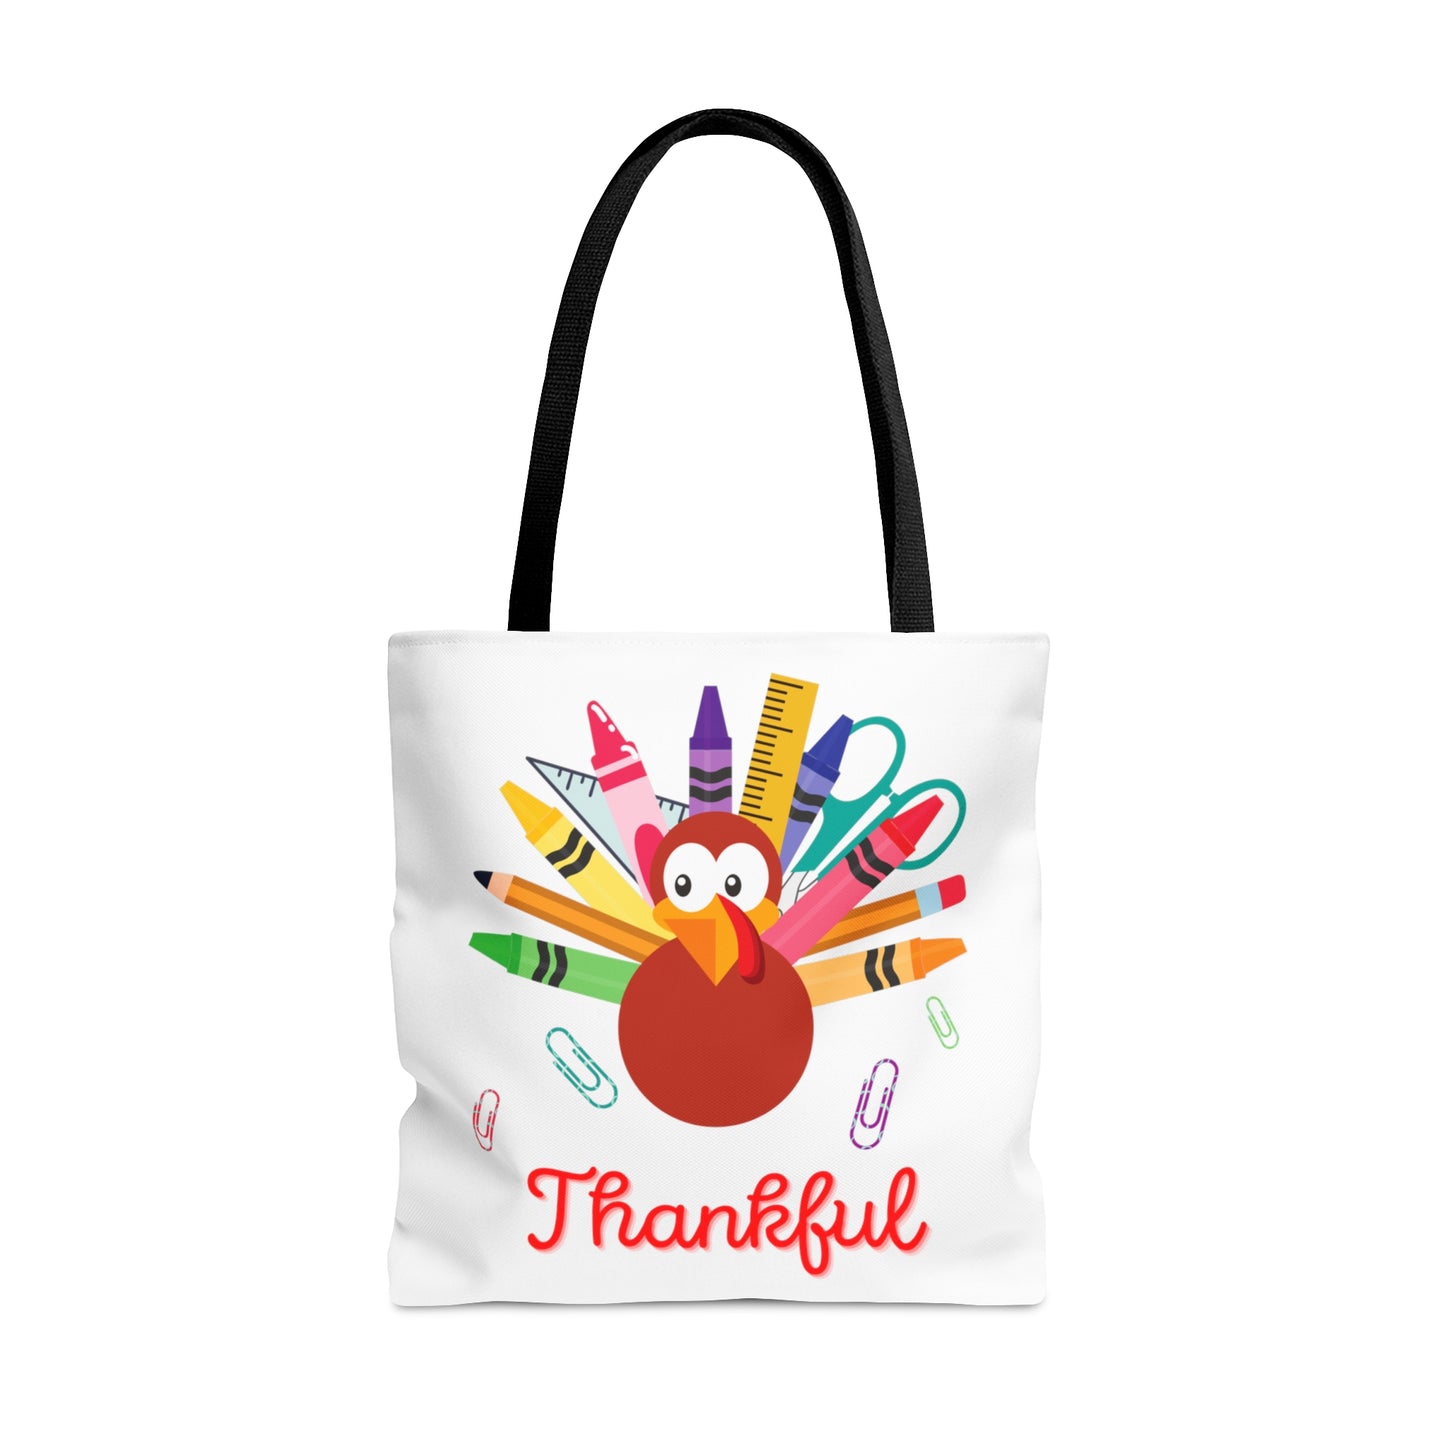 Thankful Tote Bag